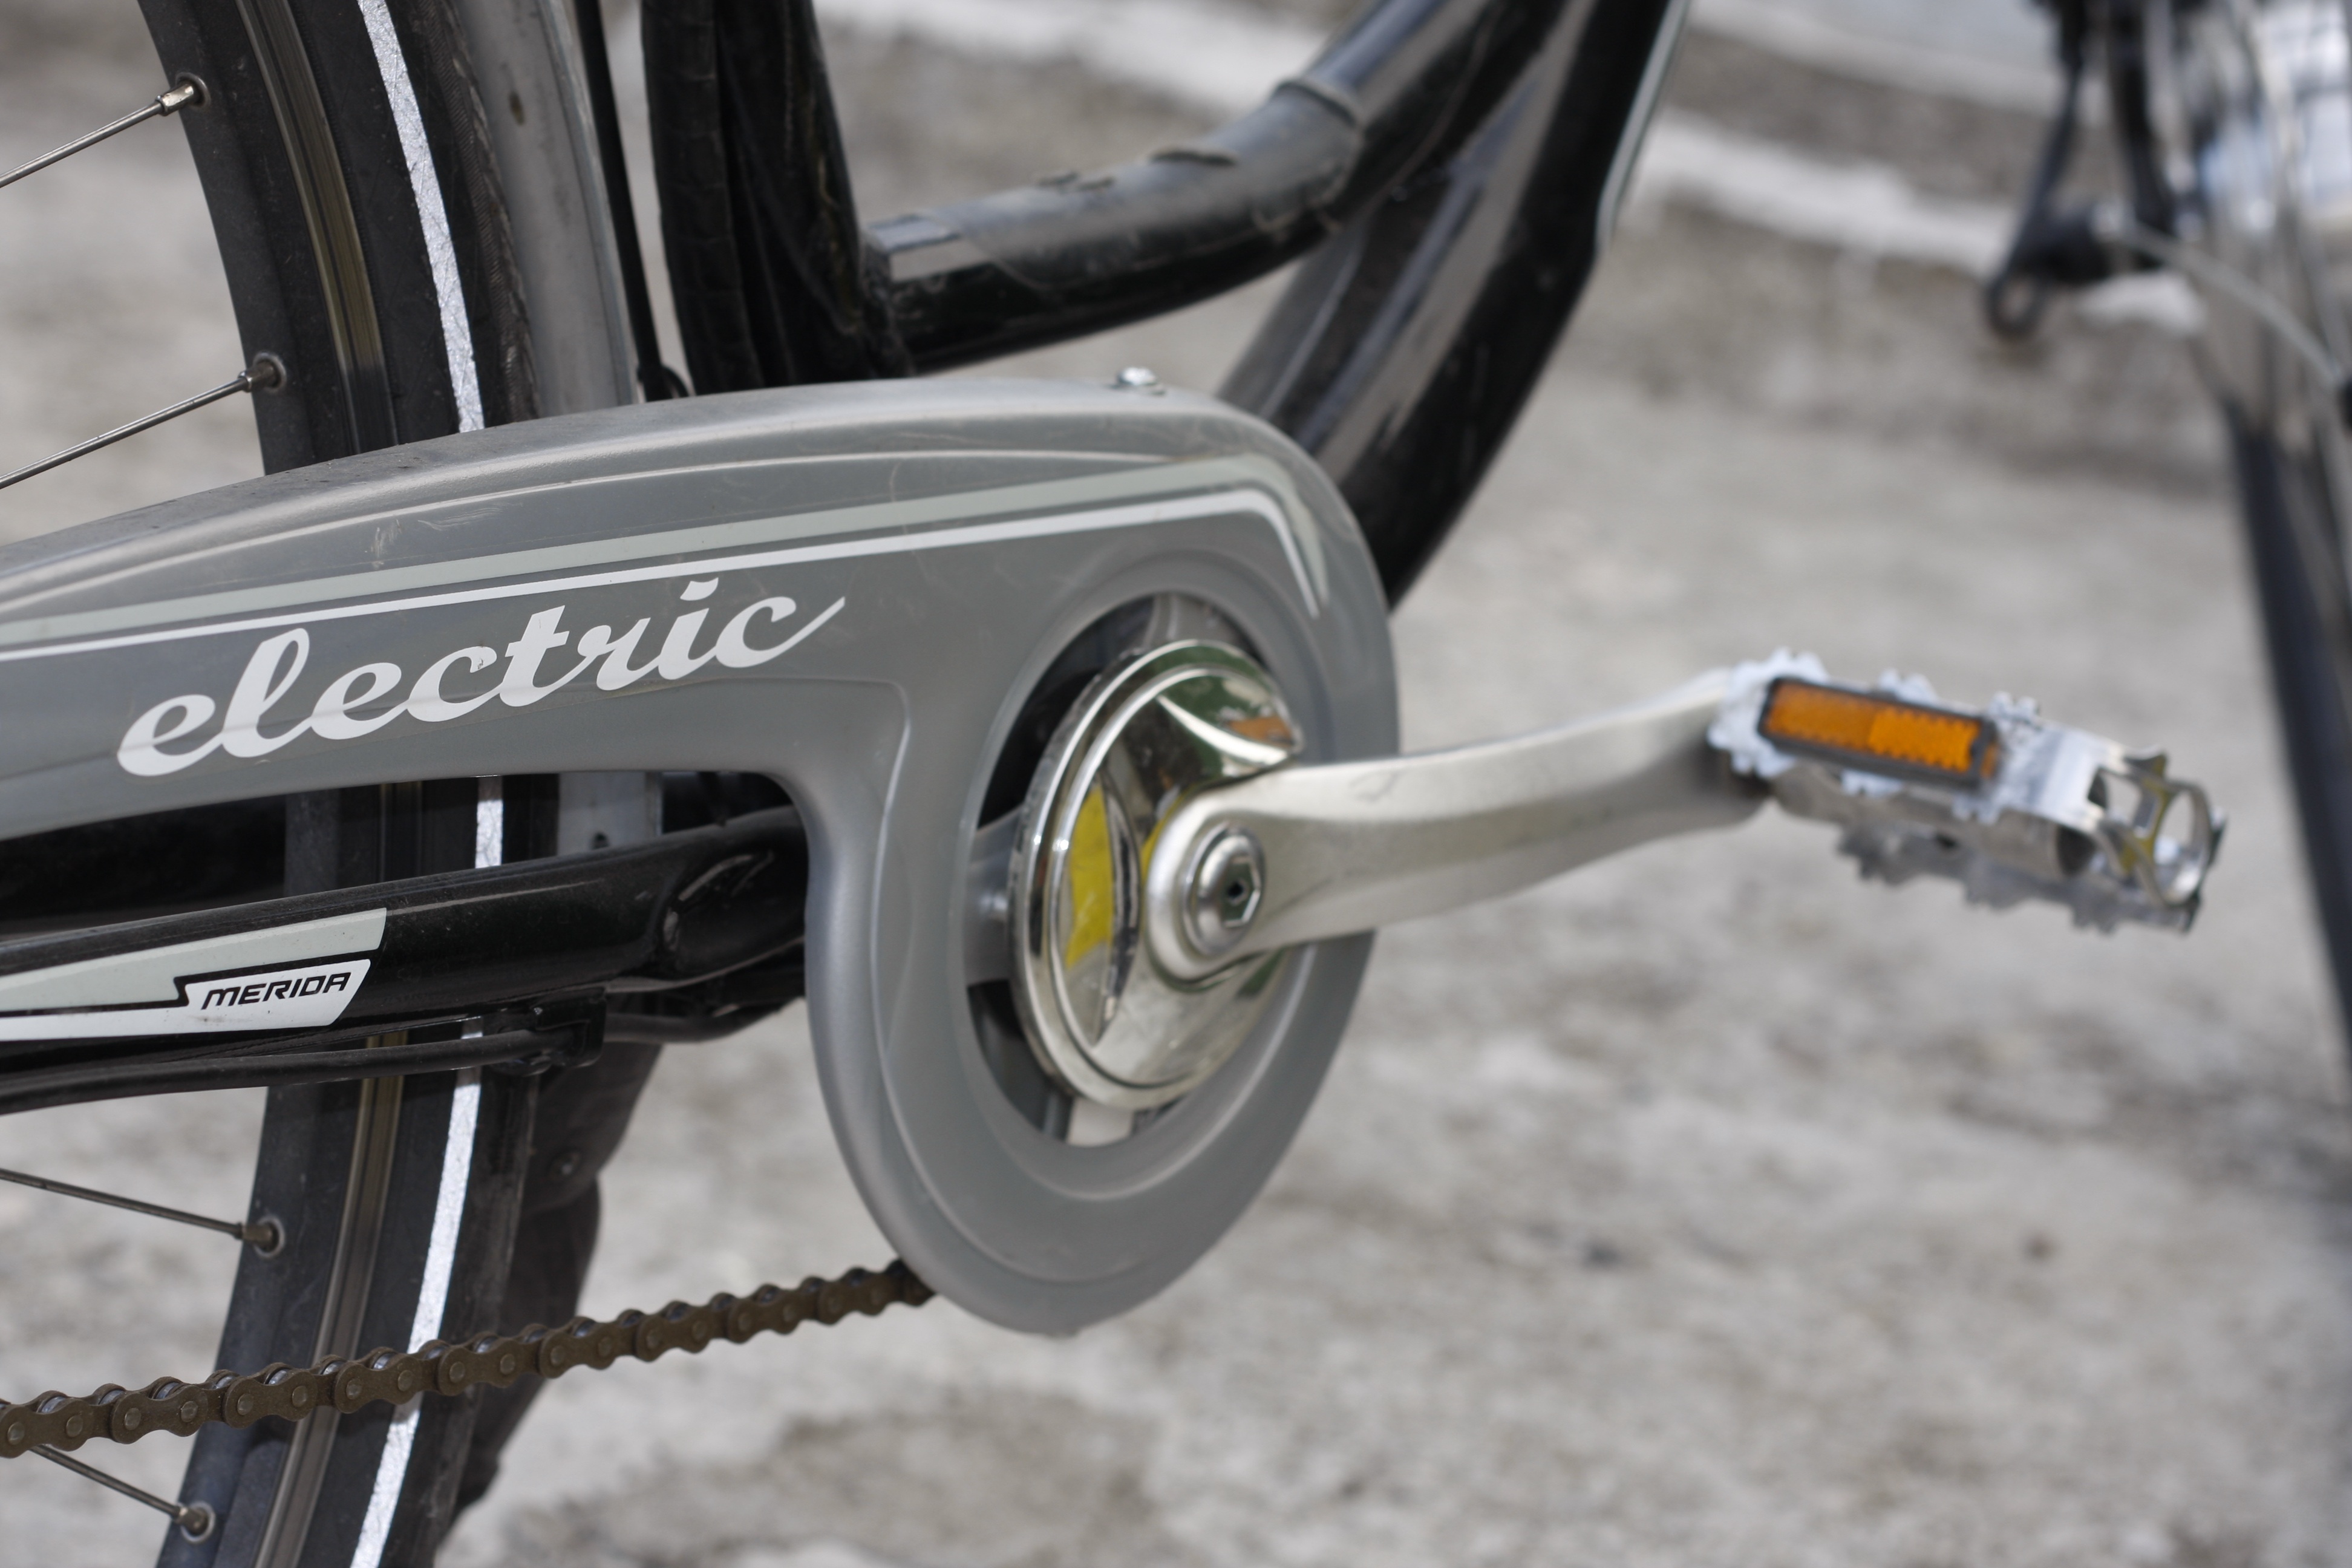 Electric Bikes